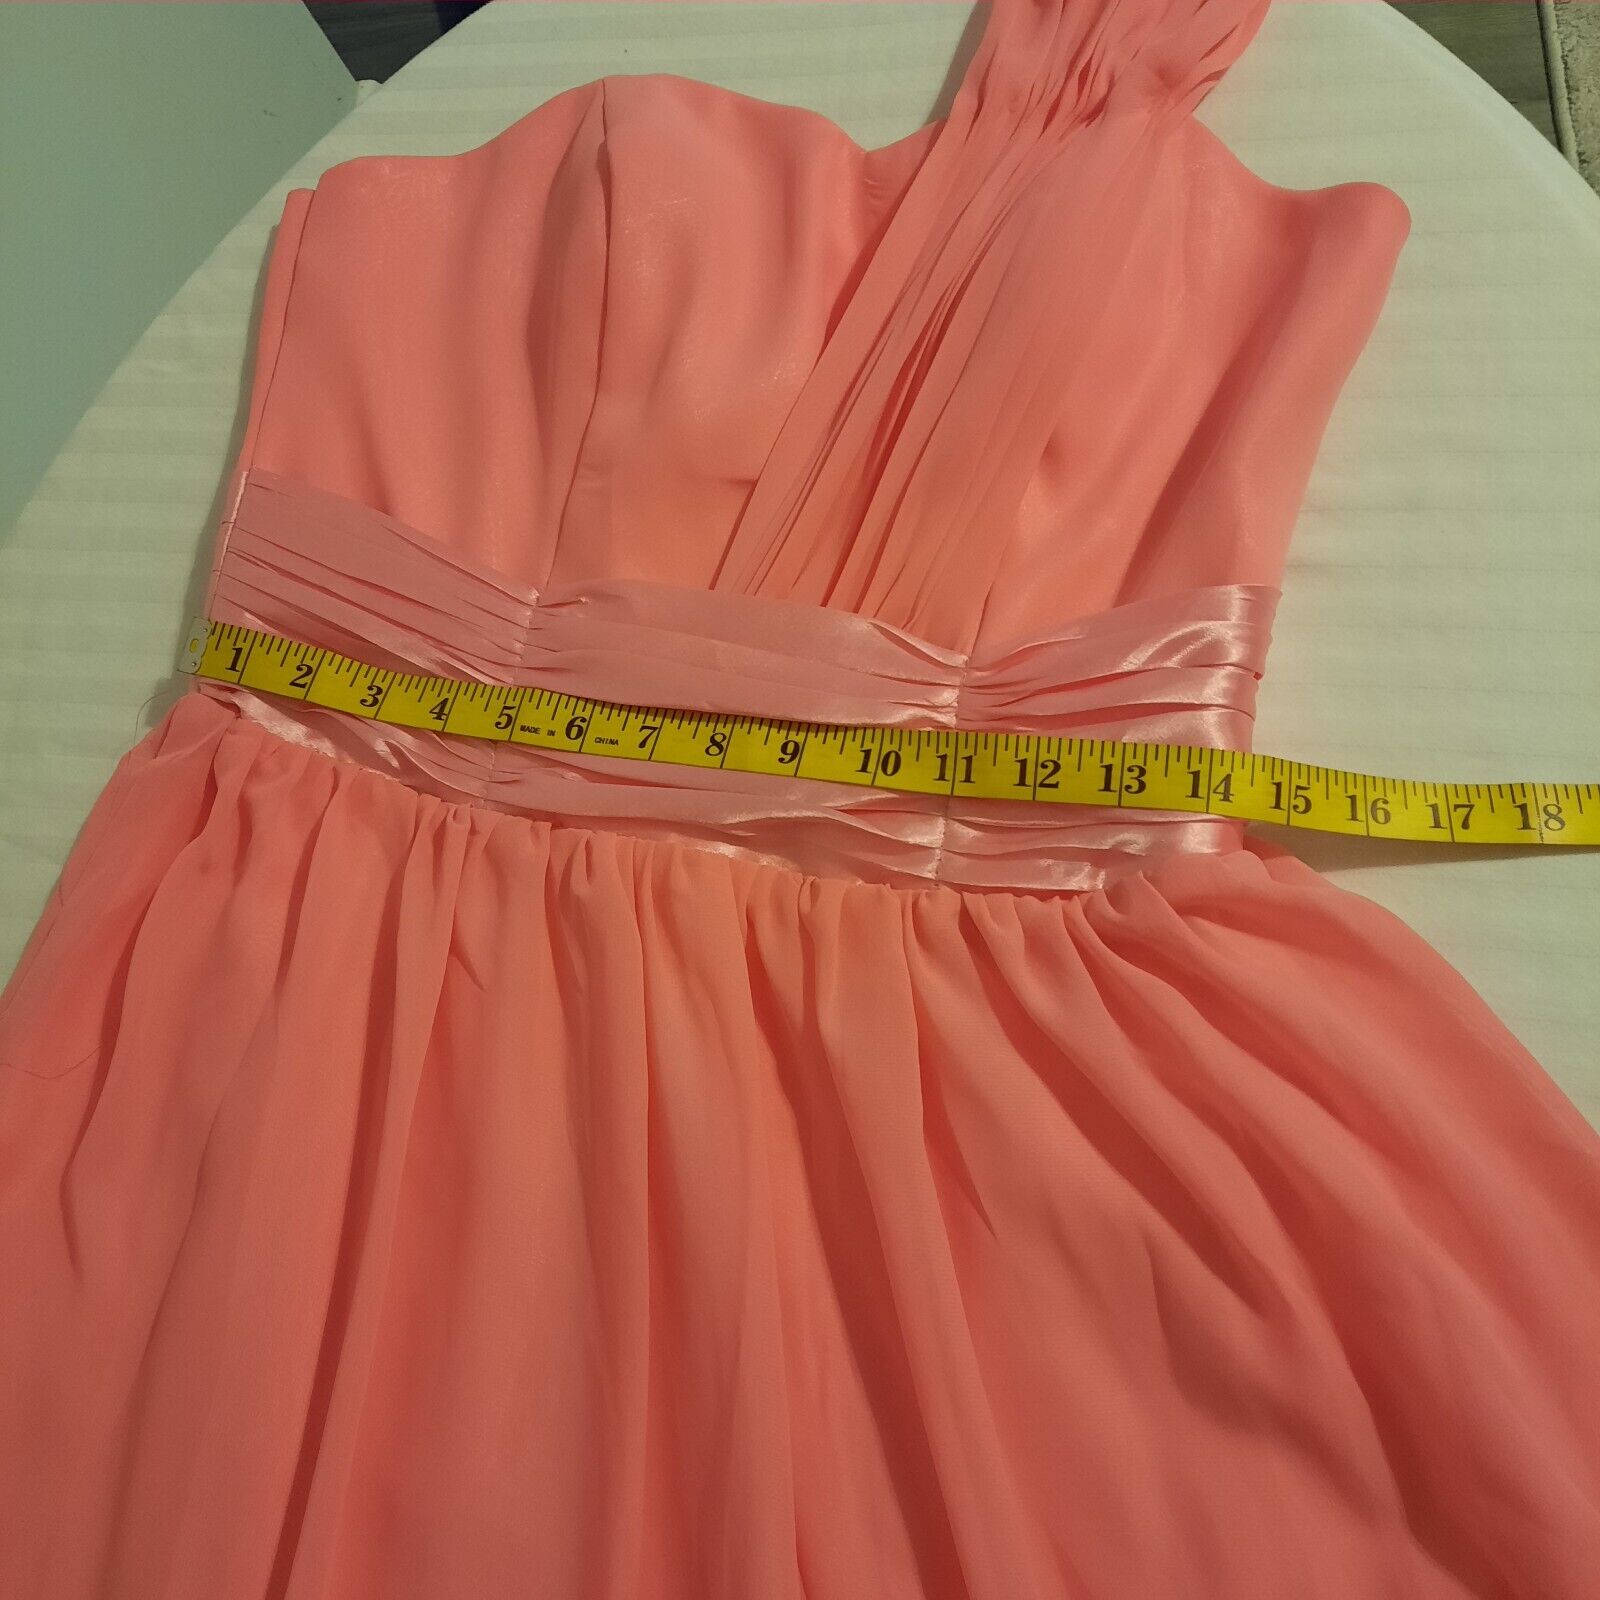 One Shoulder Bridesmaid Dress Size 12 - image 6